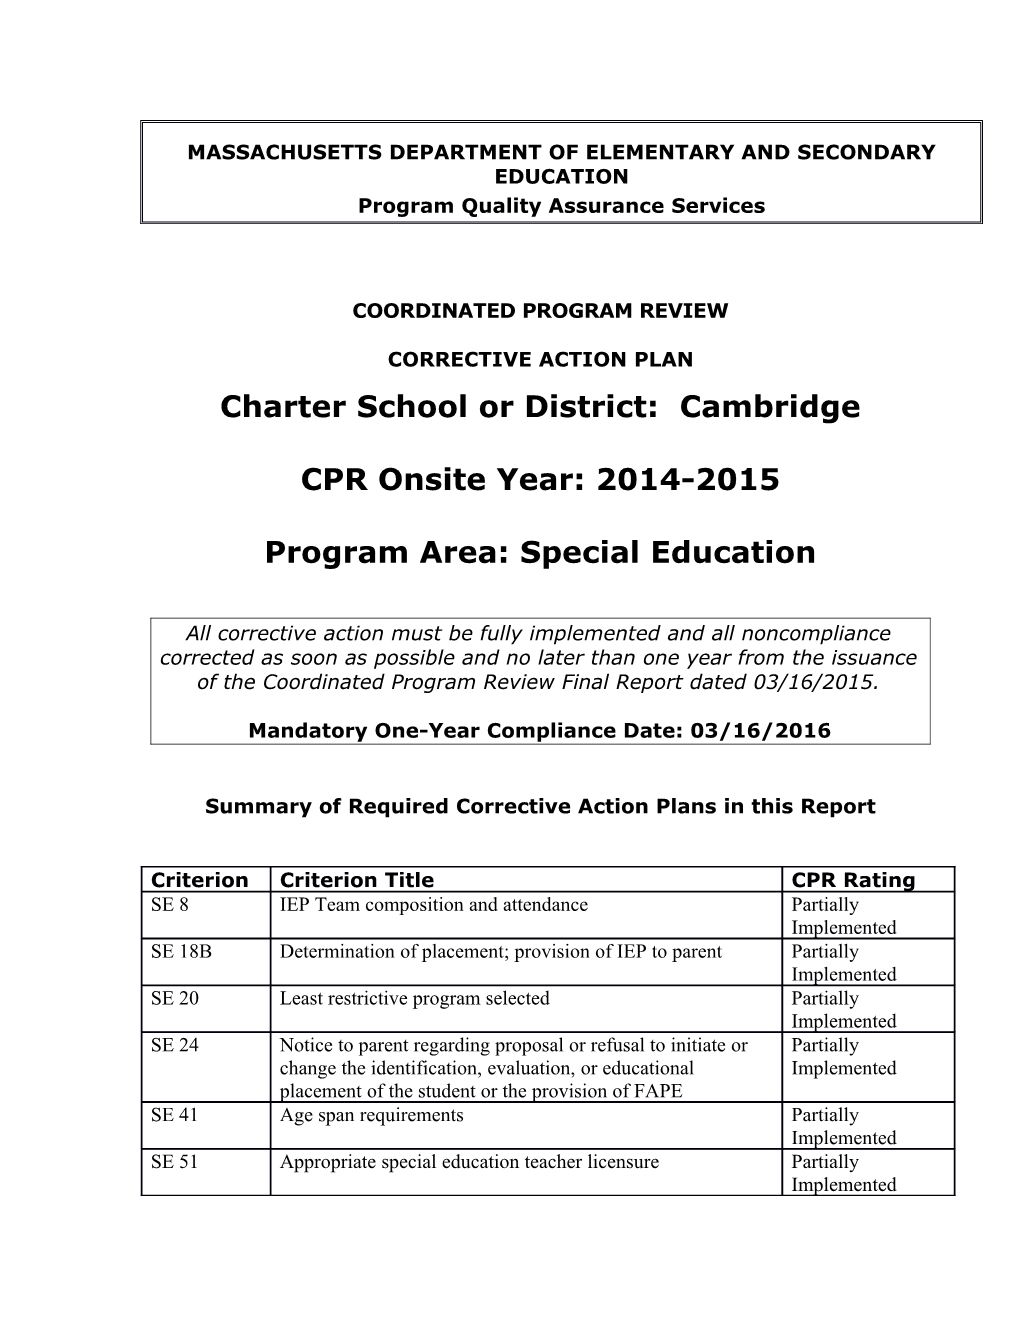 Cambridge Public Schools CAP 2015